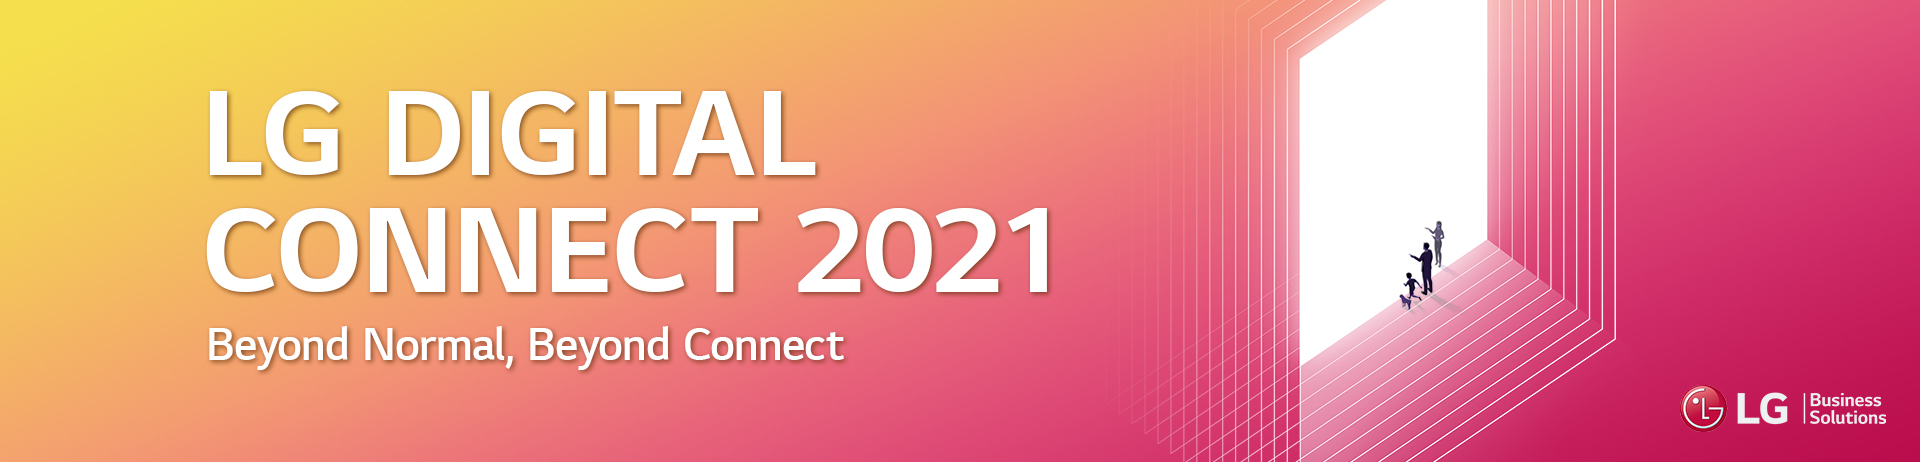 LG Digital Connect 2021